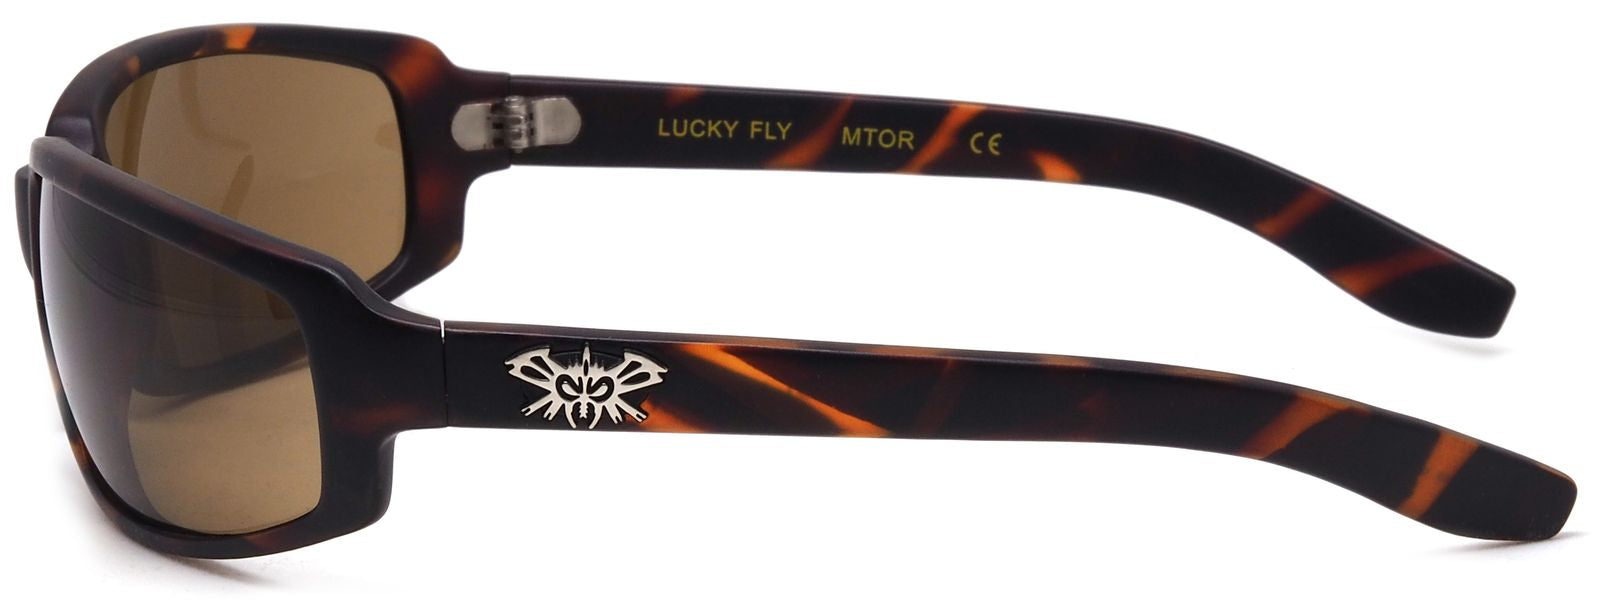 Black Flys - Lucky Fly - Sonnenbrille - Braun